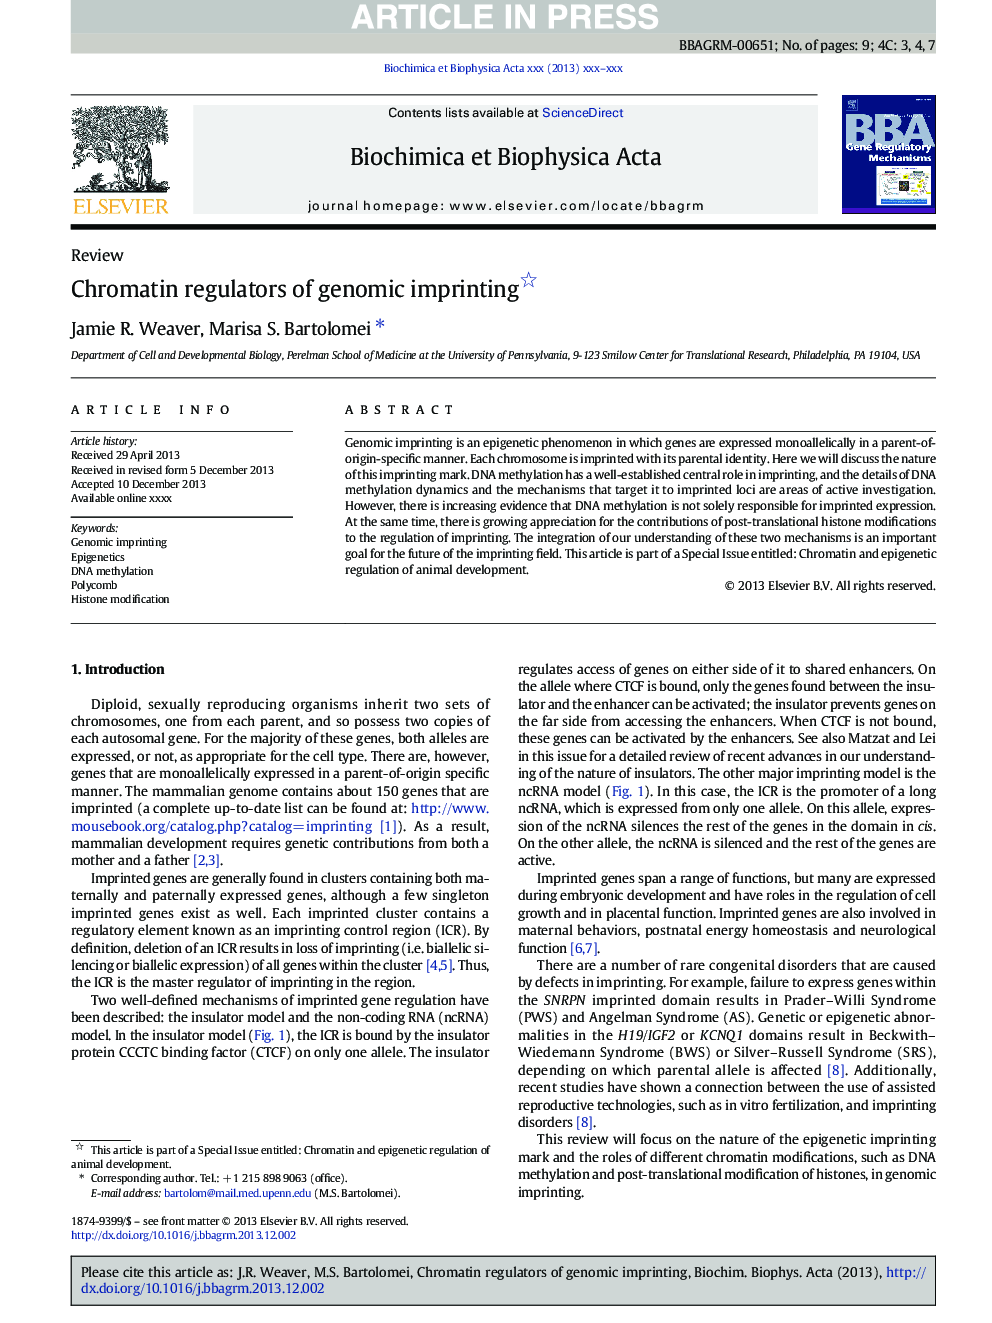 Chromatin regulators of genomic imprinting